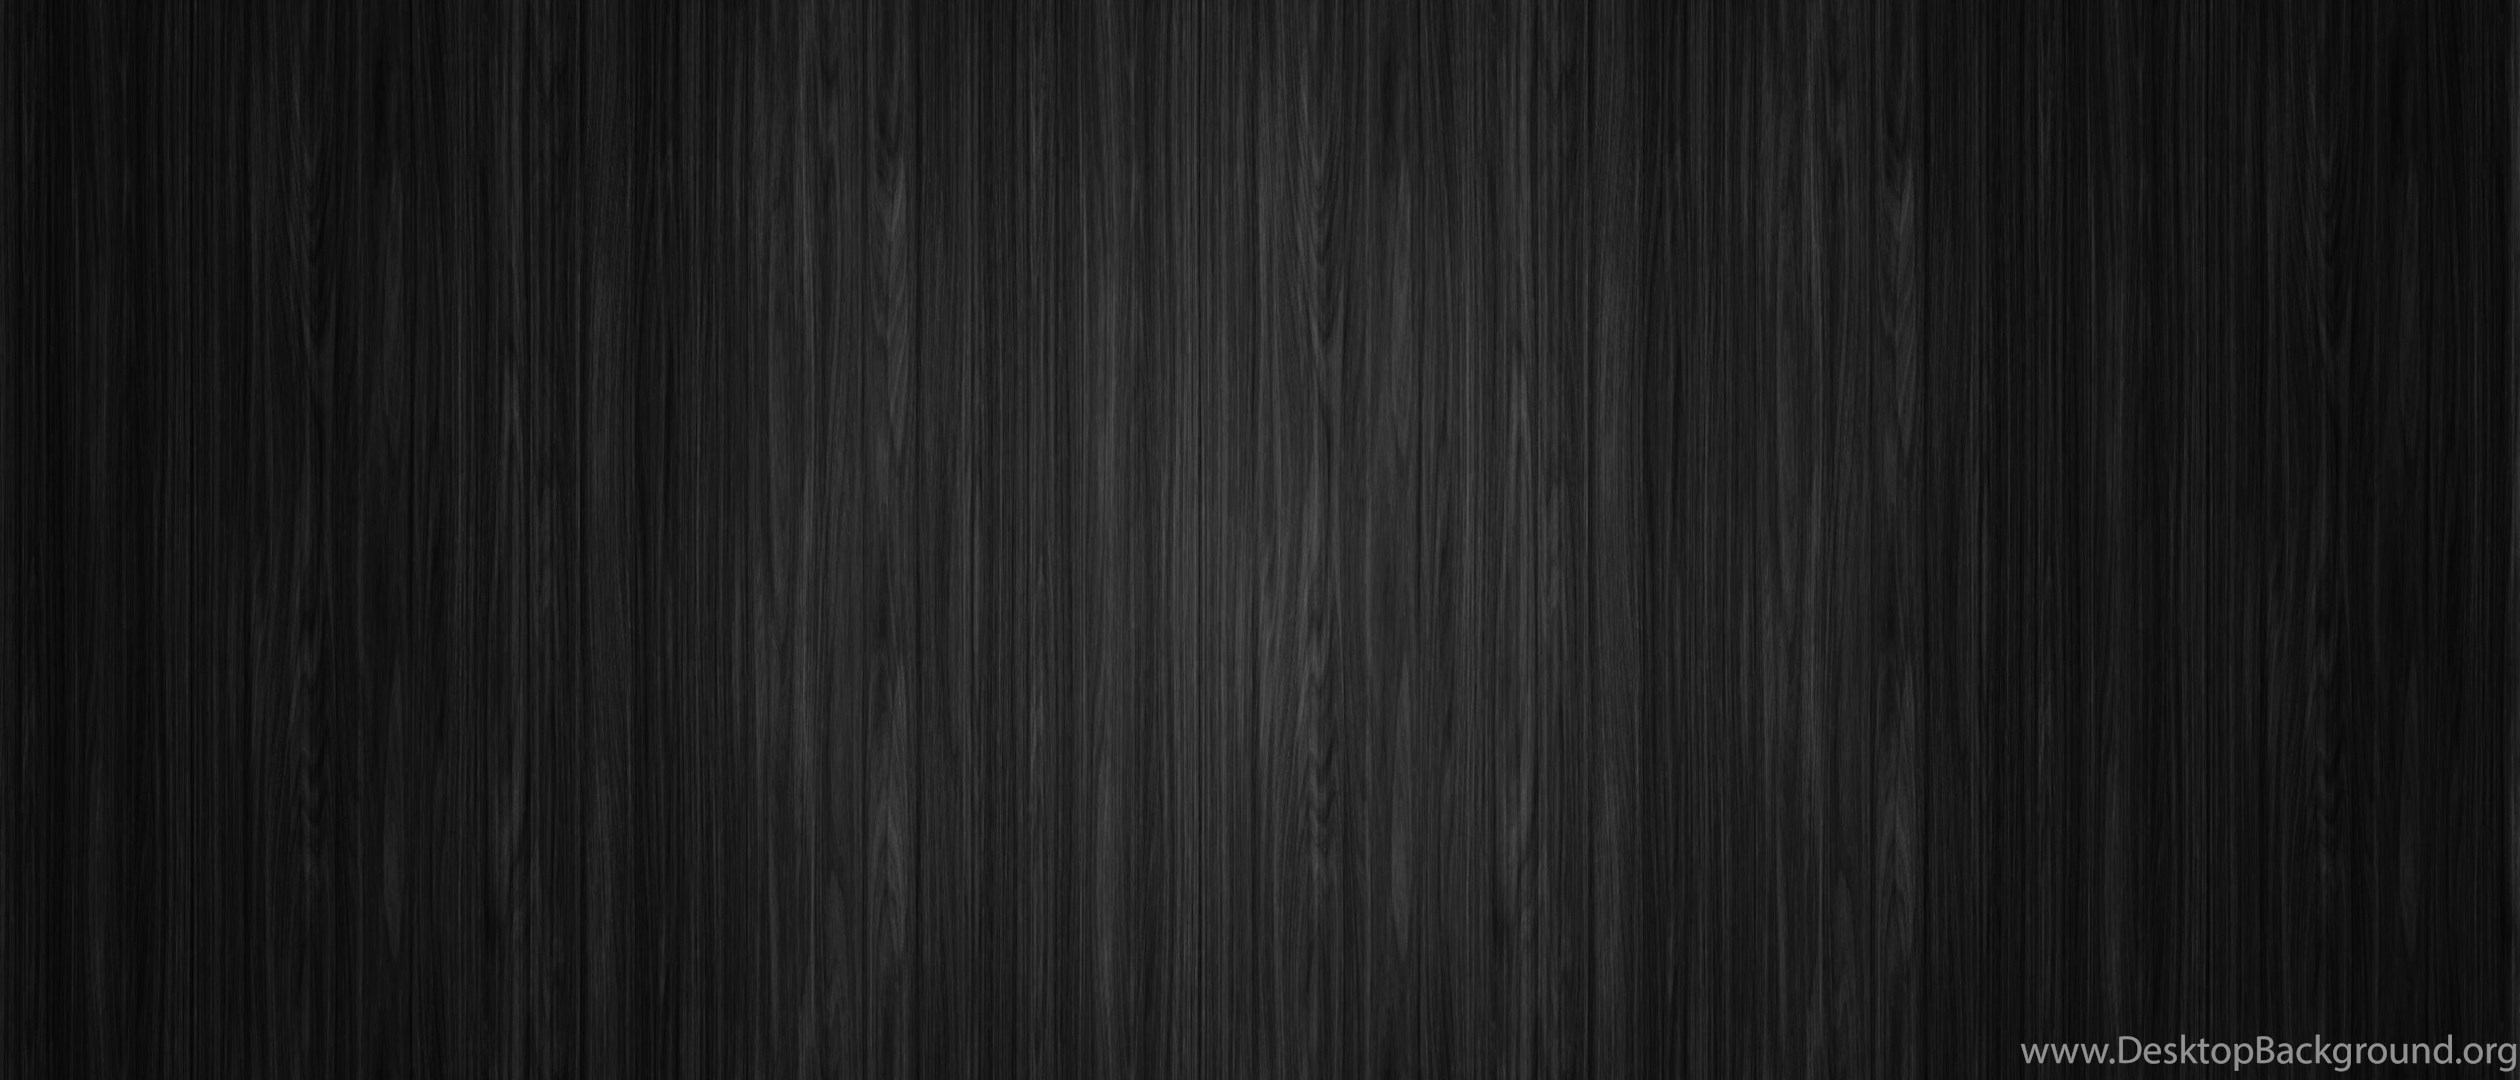 Black Background Wood Clean HD Desktop Wallpaper, Widescreen. Desktop Background